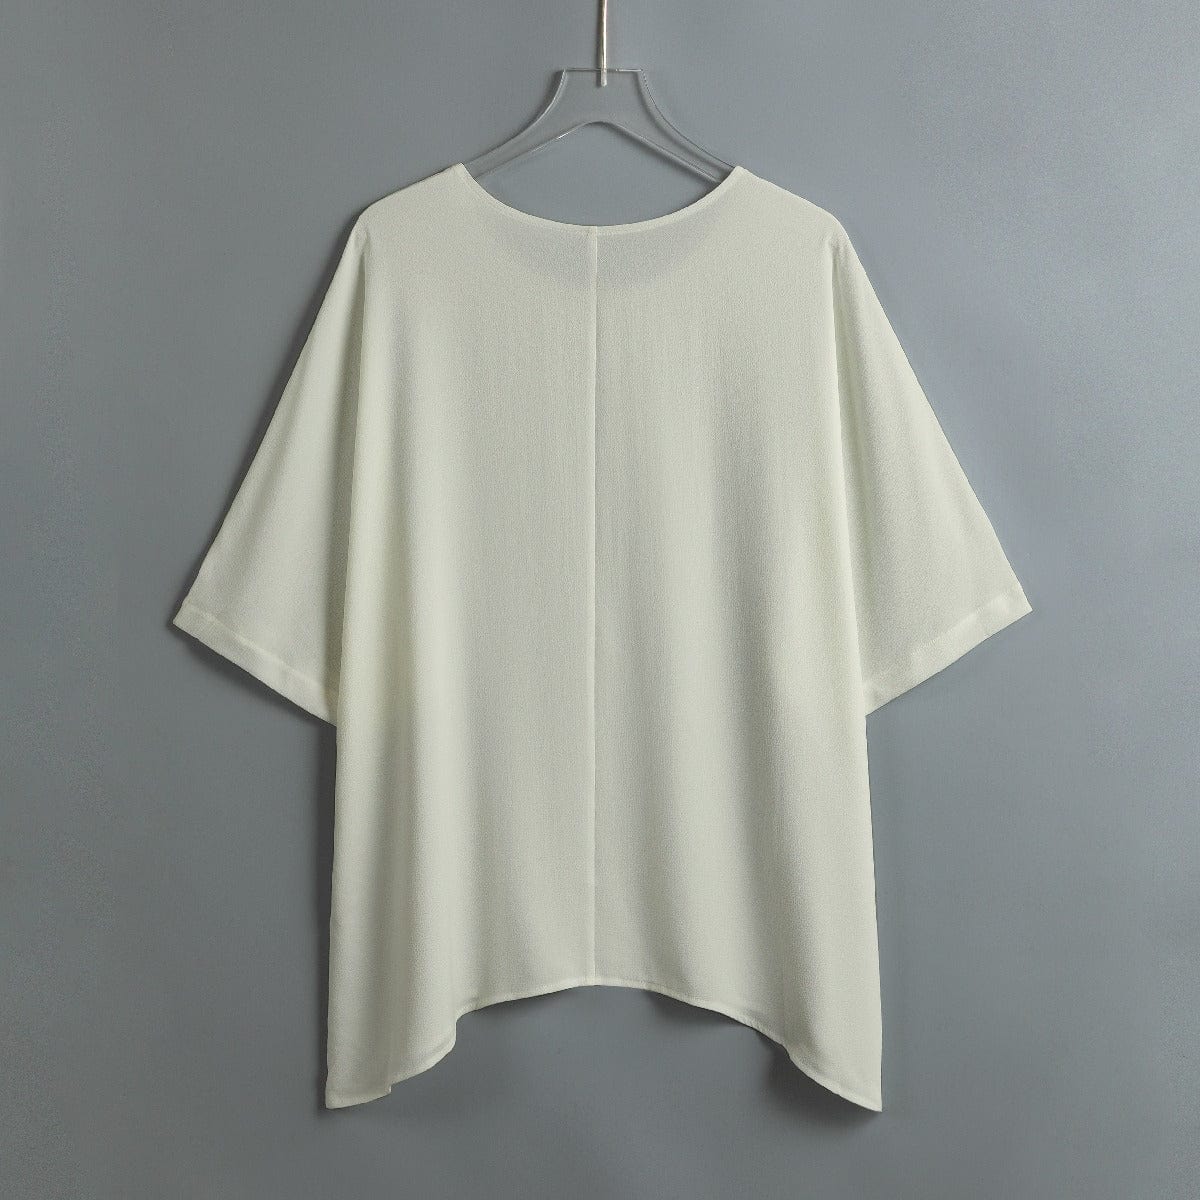 Yoycol All-Over Print Women's Bat Sleeve Shirt